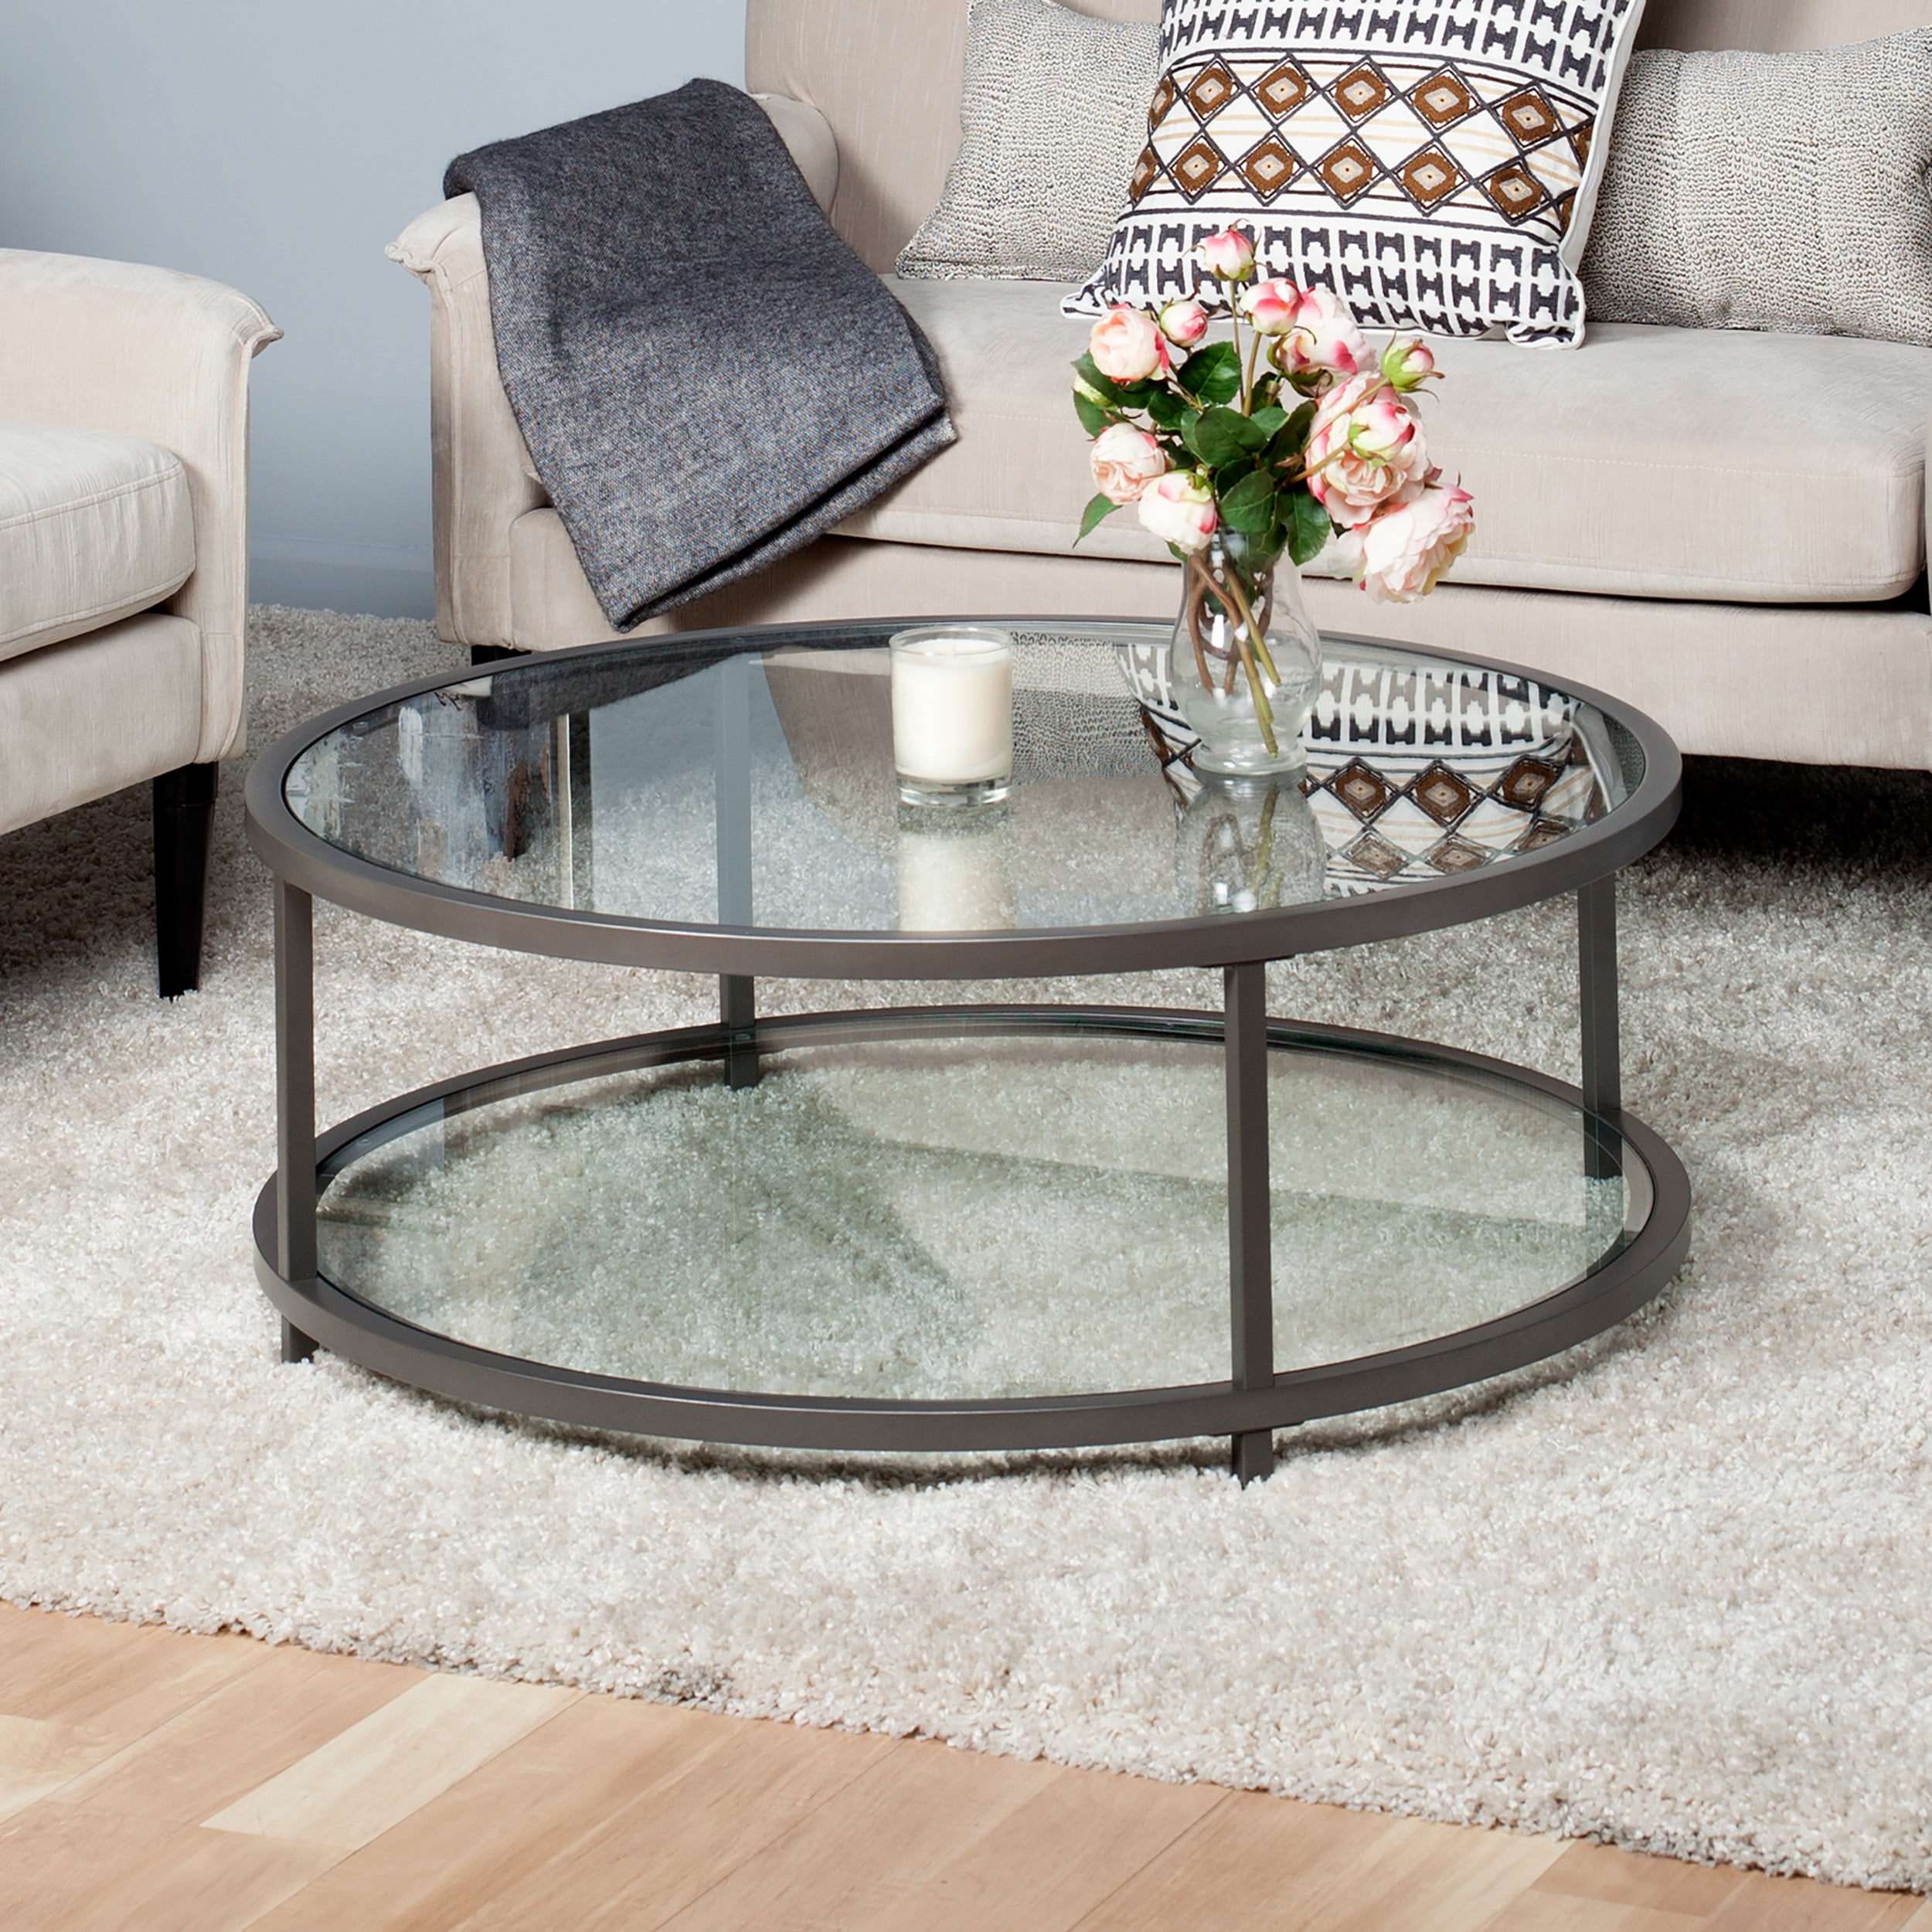 Studio Designs Home Camber 2 Tier, Round Coffee Table Modern Design